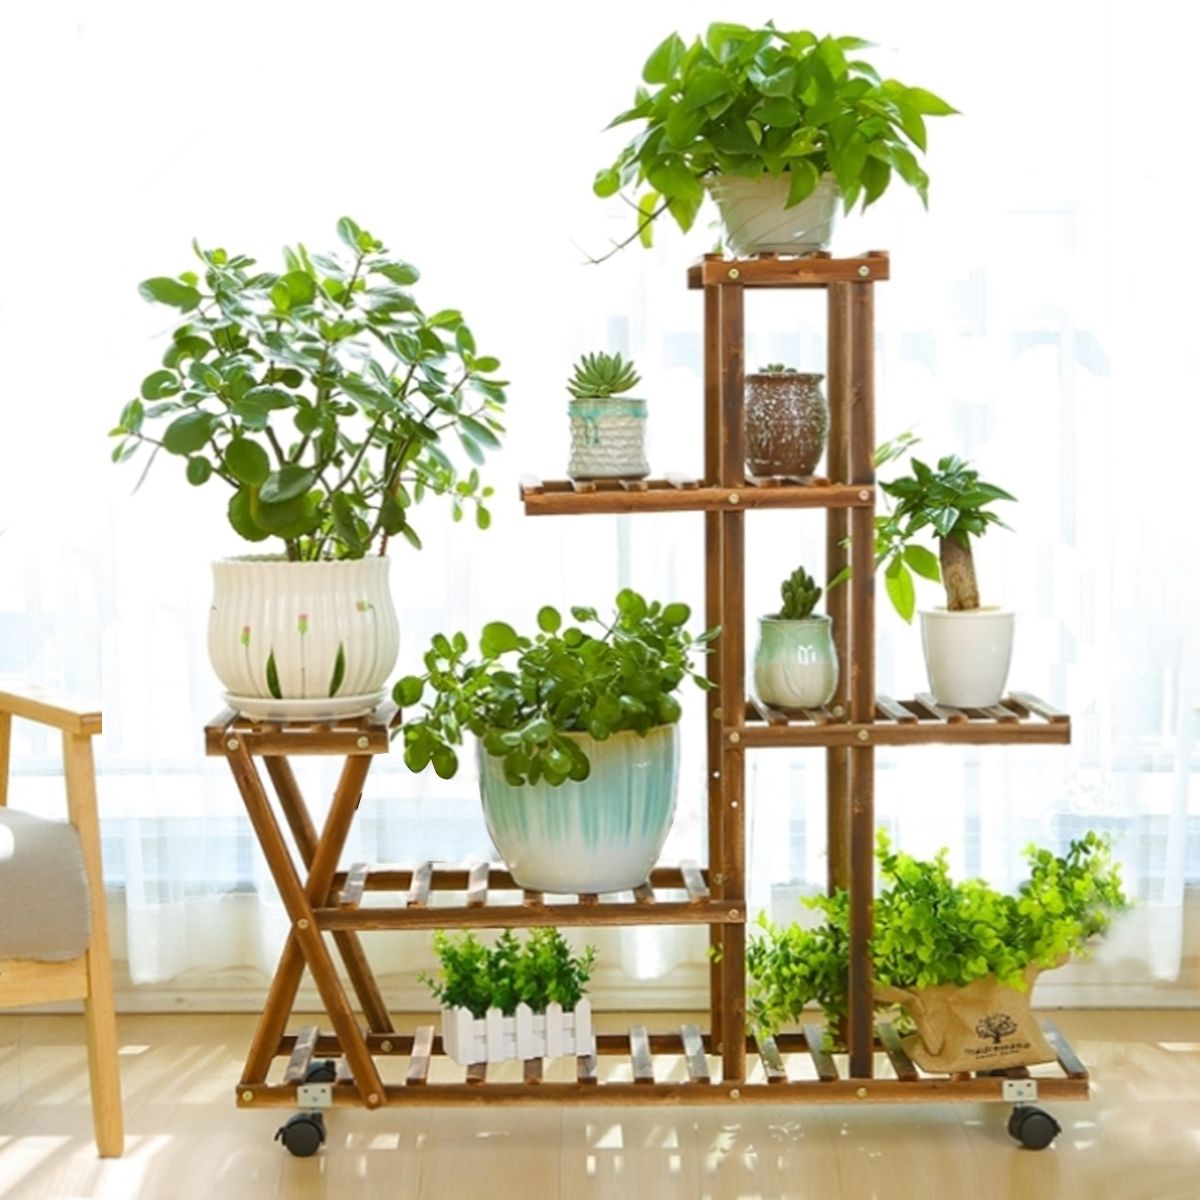 Wooden-Plant-Flower-Pot-Stand-Shelf--Indoor-Outdoor-Garden-Planter-With-Wheels-1652395